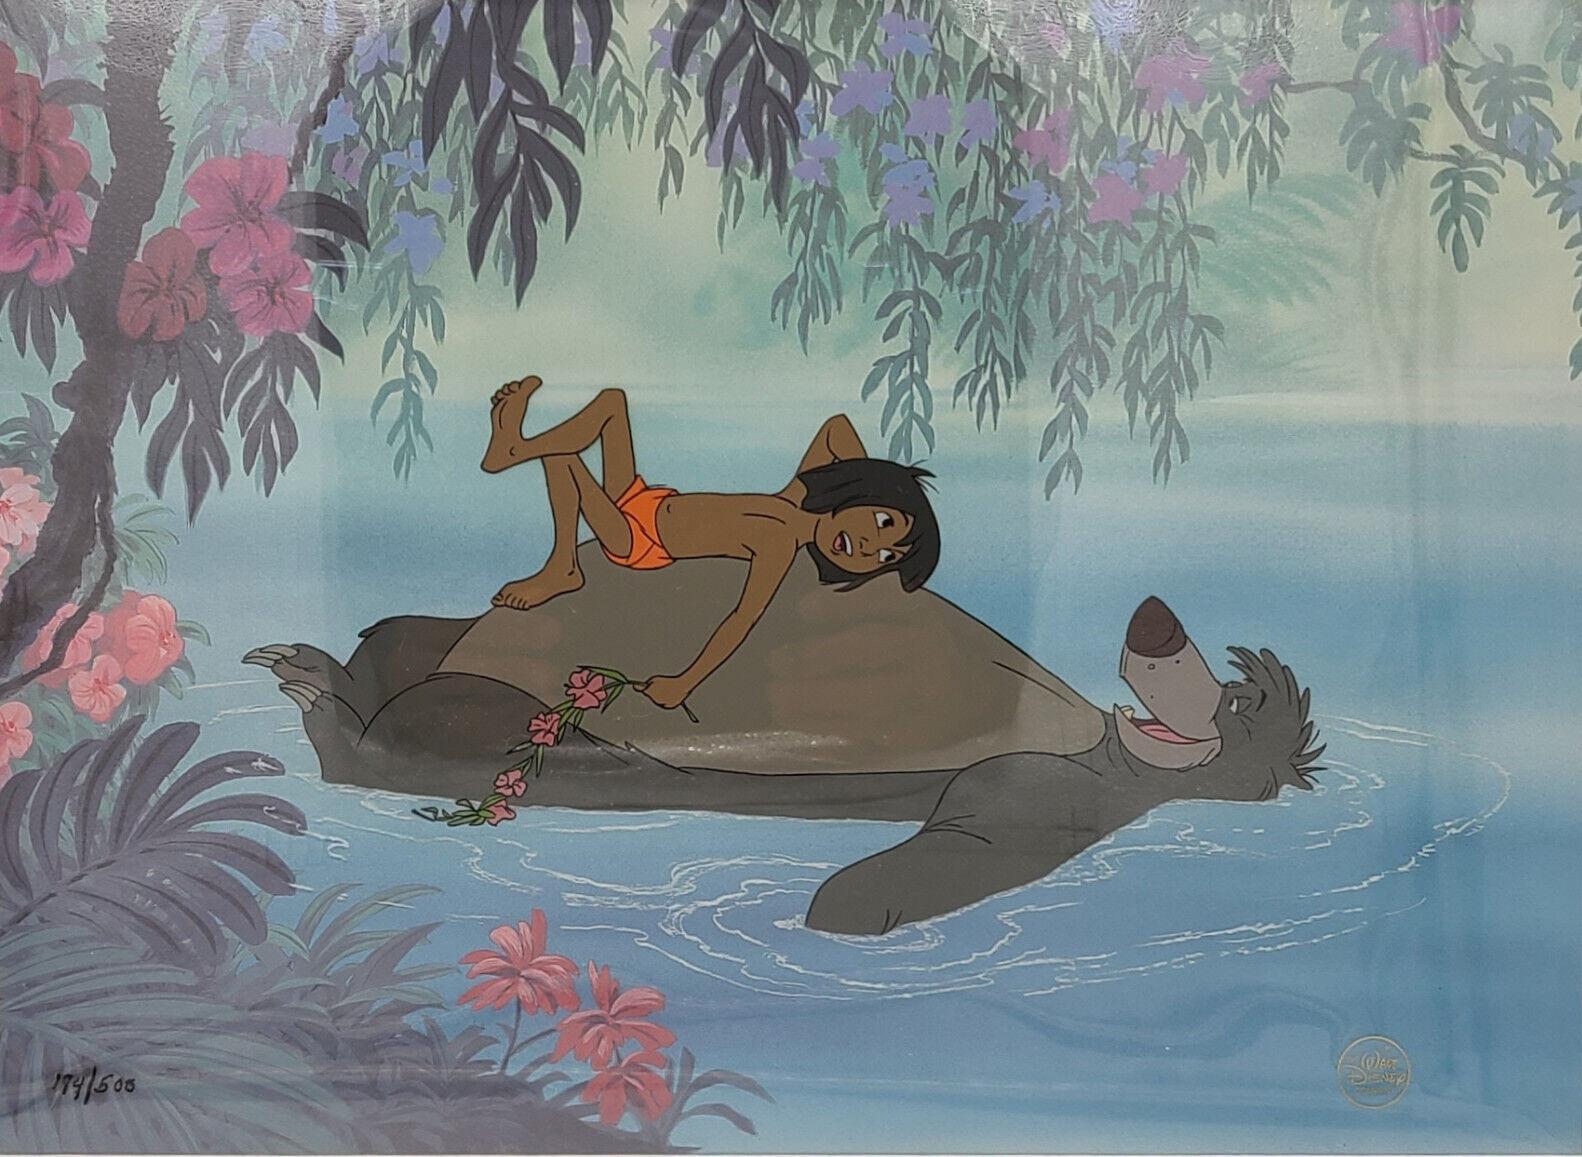 The Jungle Book Original Limited Edition Cel: Mowgli and Baloo - Art by Walt Disney Studio Artists